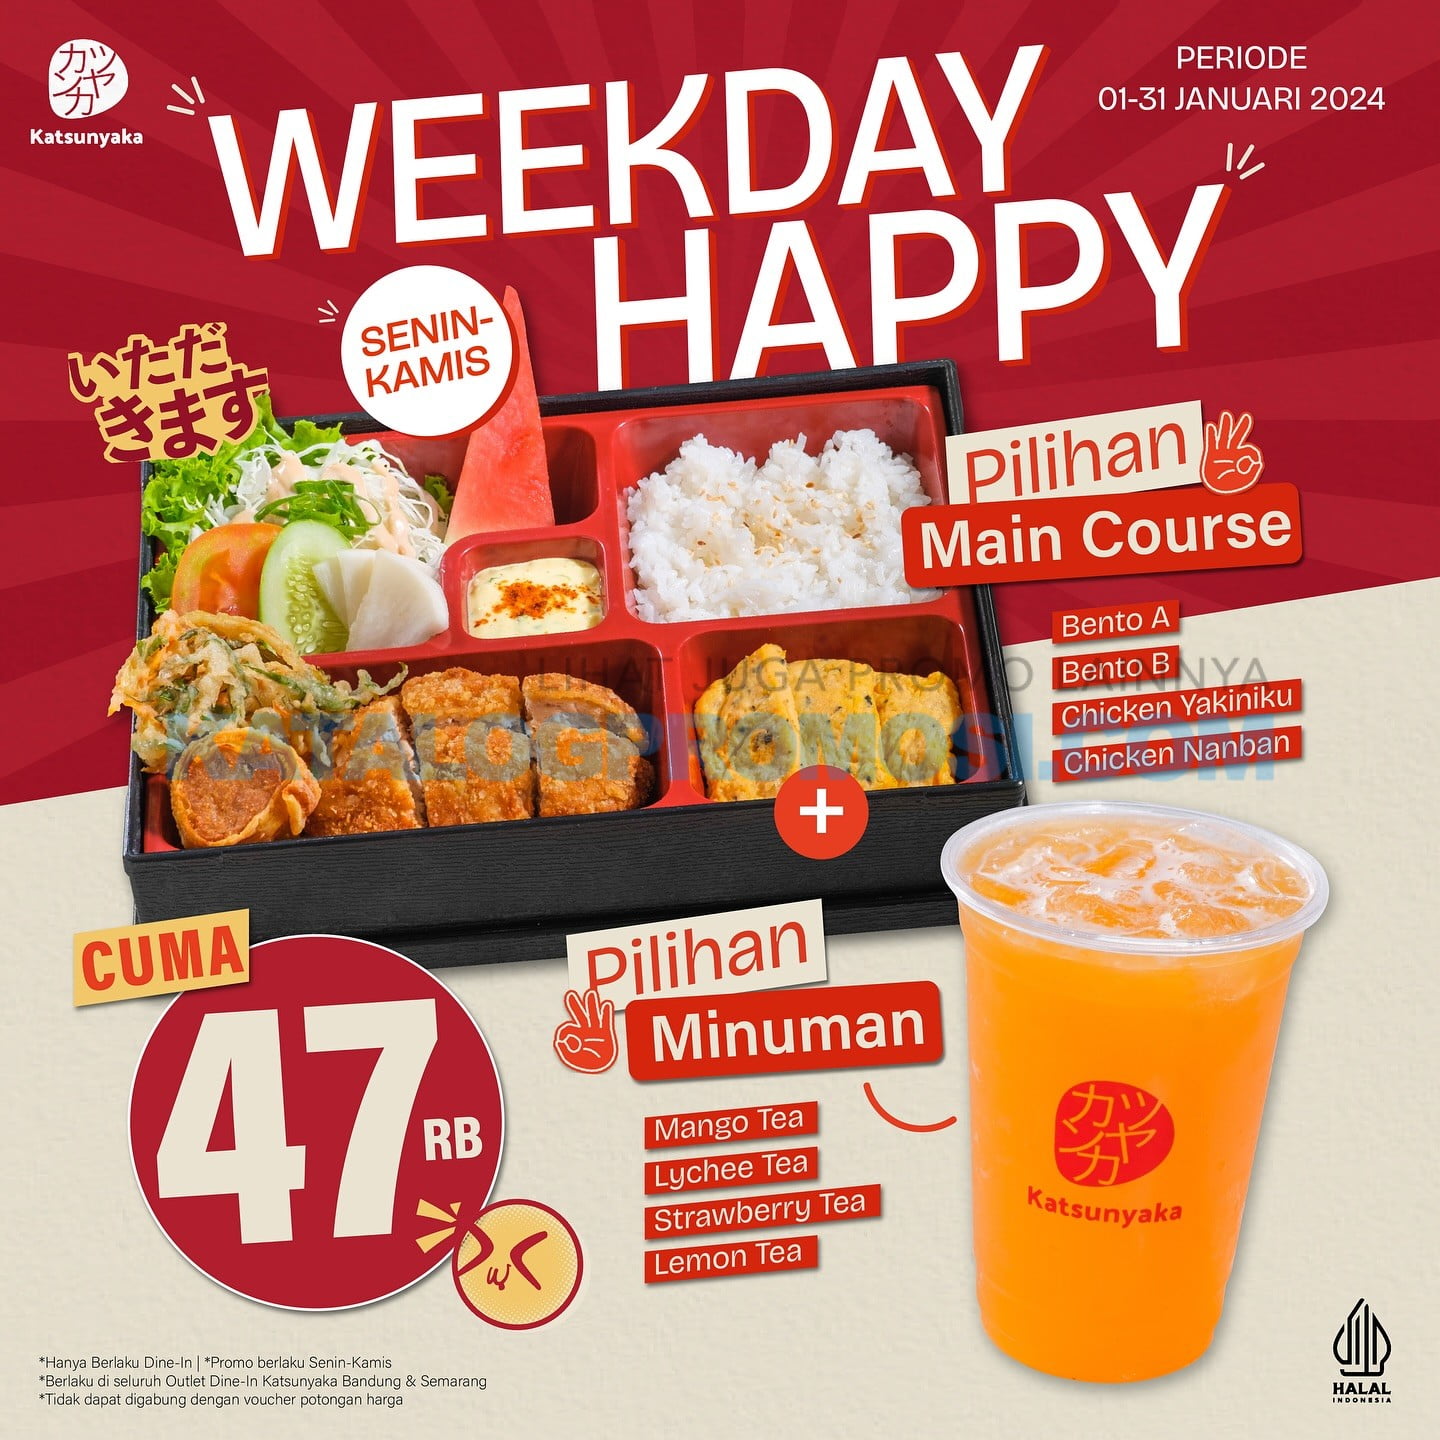 Promo KATSUNYAKA WEEKDAY HAPPY - PAKET 1 MAKANAN + 1 MINUMAN cuma Rp. 47.000